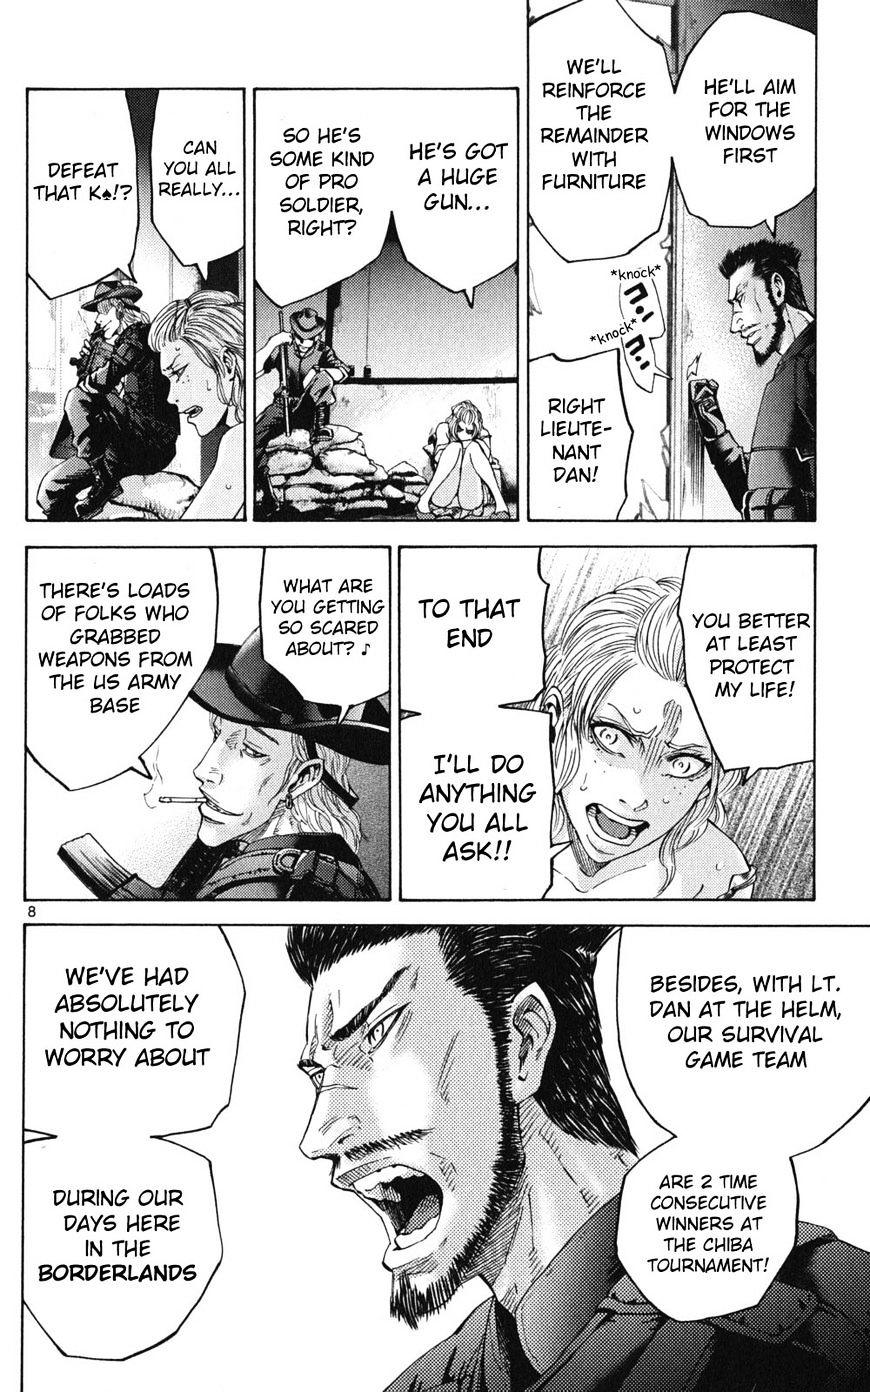 Imawa No Kuni No Alice Chapter 49.1 : Side Story 5 - King Of Spades (1) page 7 - Mangakakalot